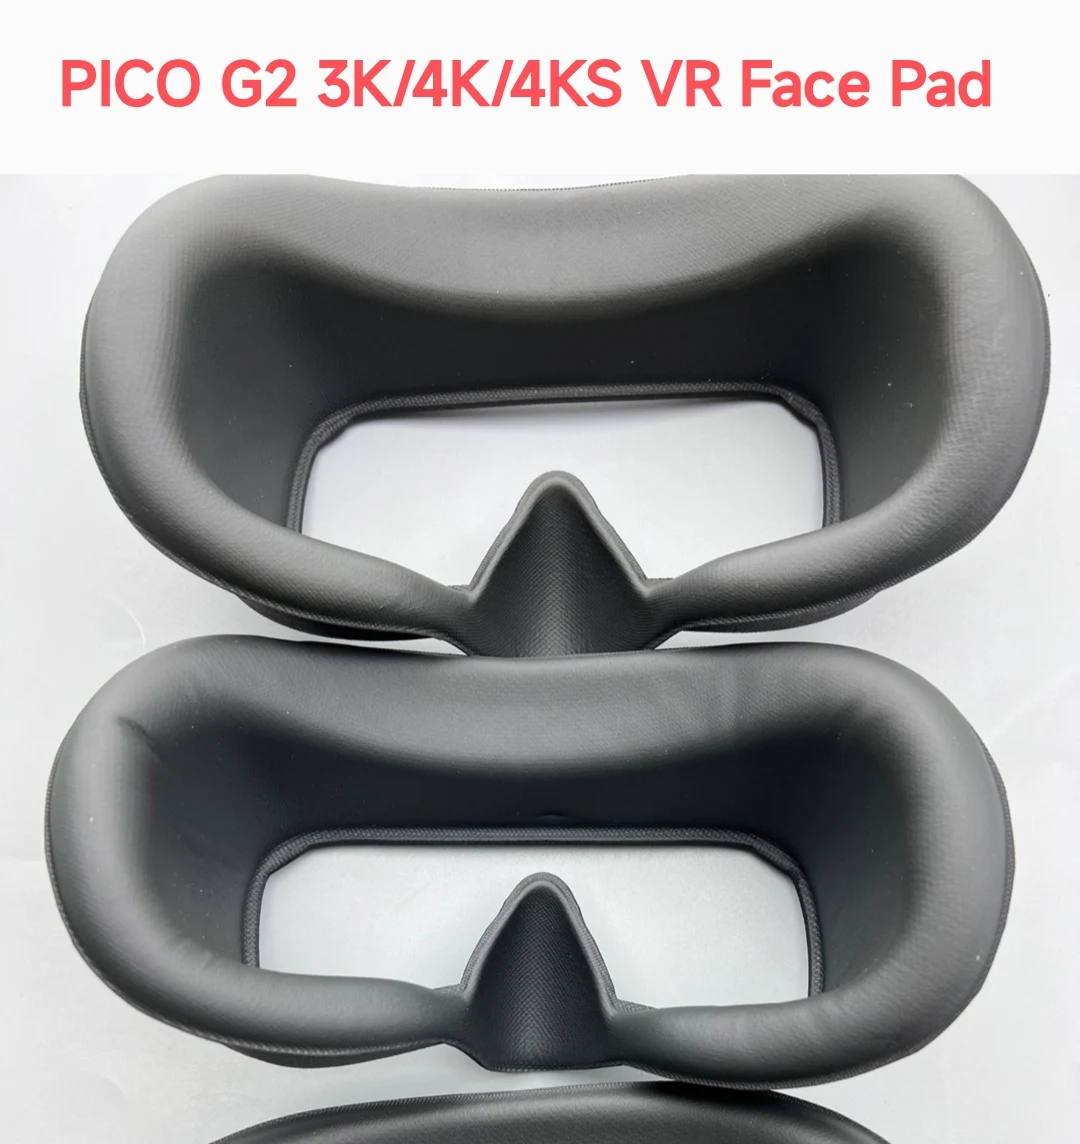 

NEW Original PICO G2 3K/4K/4KS VR Face Cushion Cover Cloth / PU Leather Virtual Reality Headset Eye Pad Mask